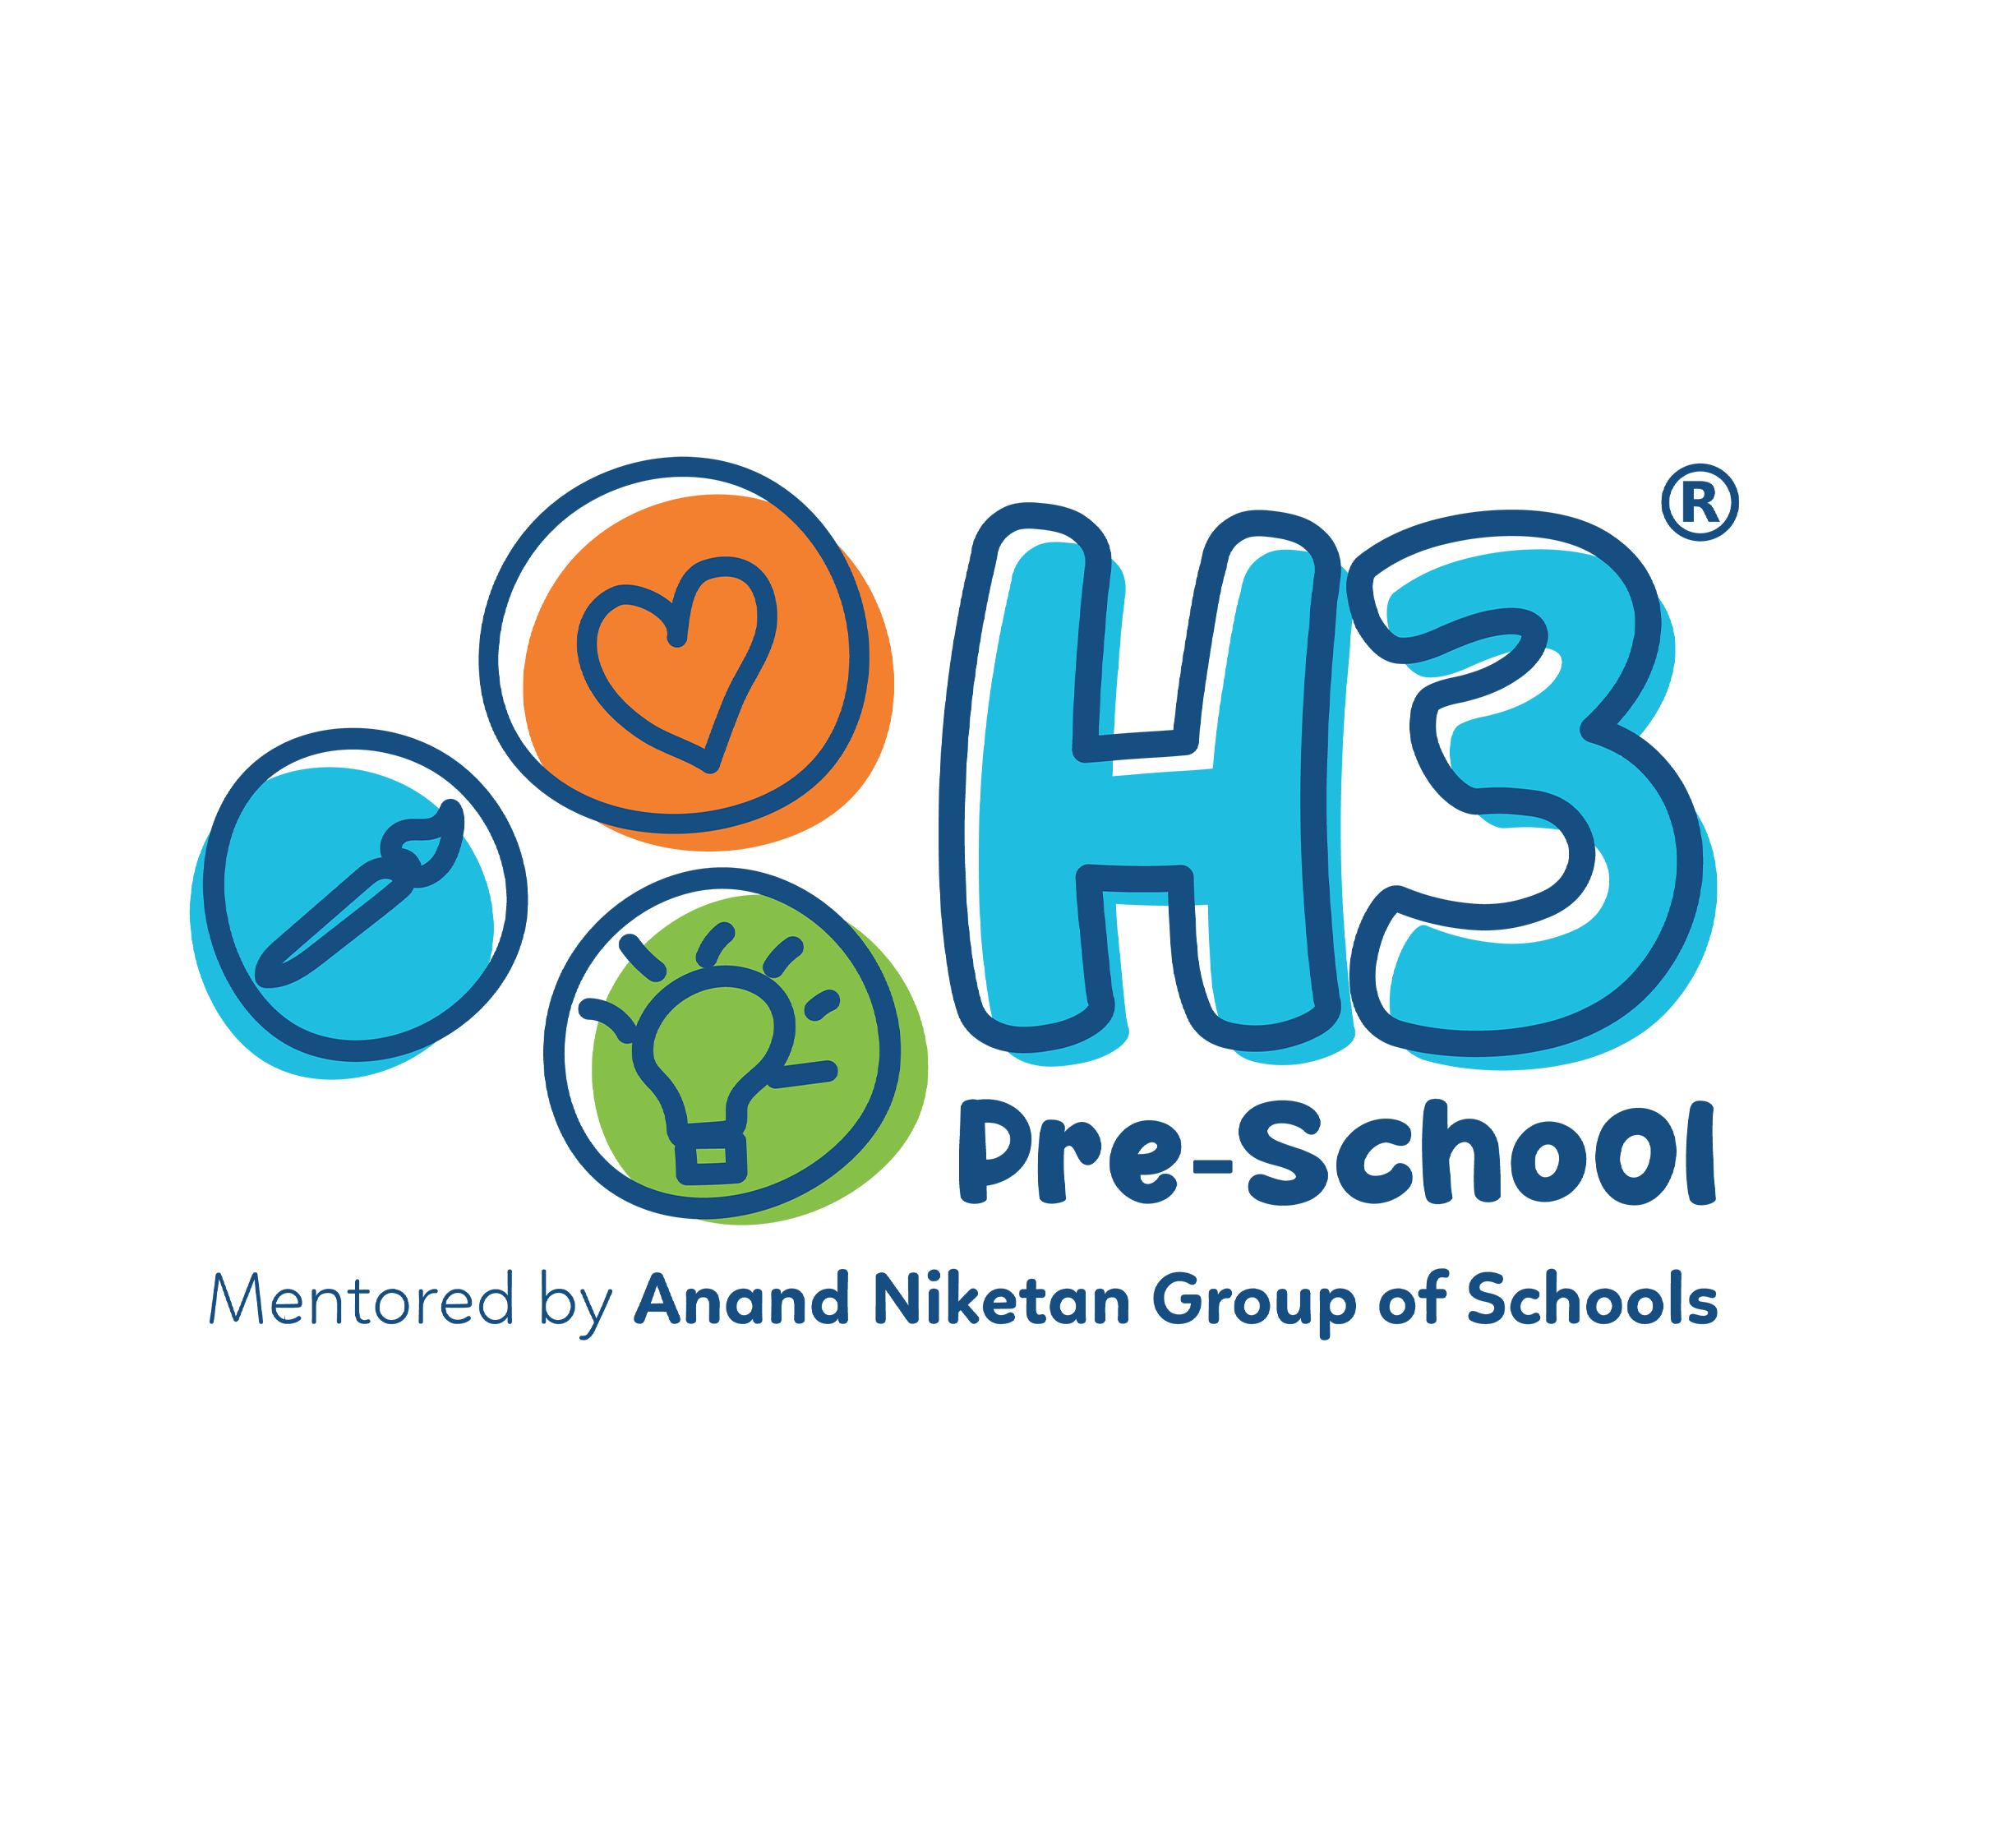 h3preschool_logo.png